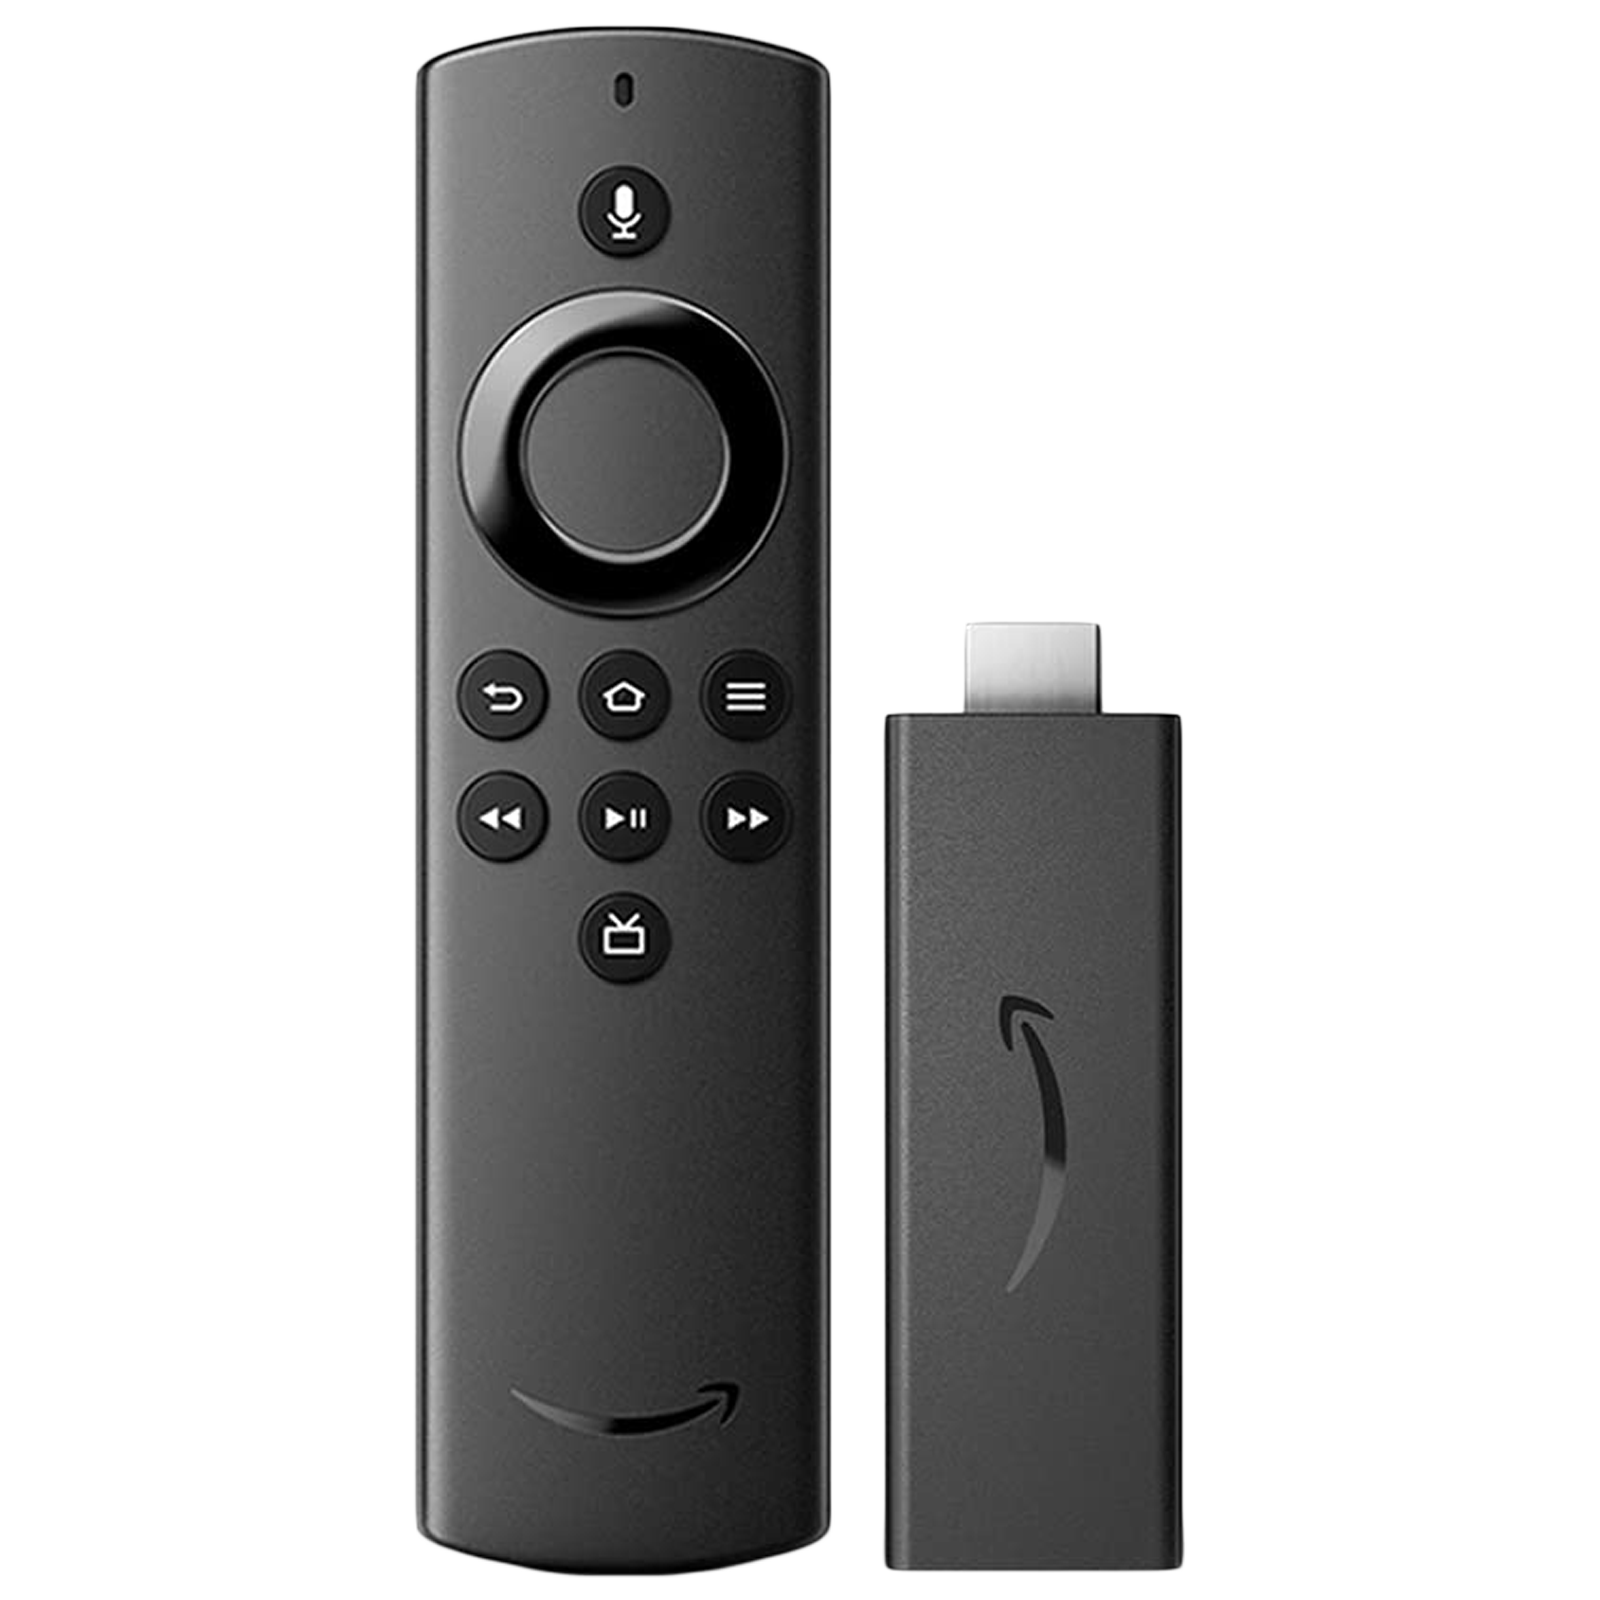  - Amazon Fire TV Stick Lite with Alexa Voice Remote Lite (Stream HD Quality Video, B08R6NFZ6R, Black)